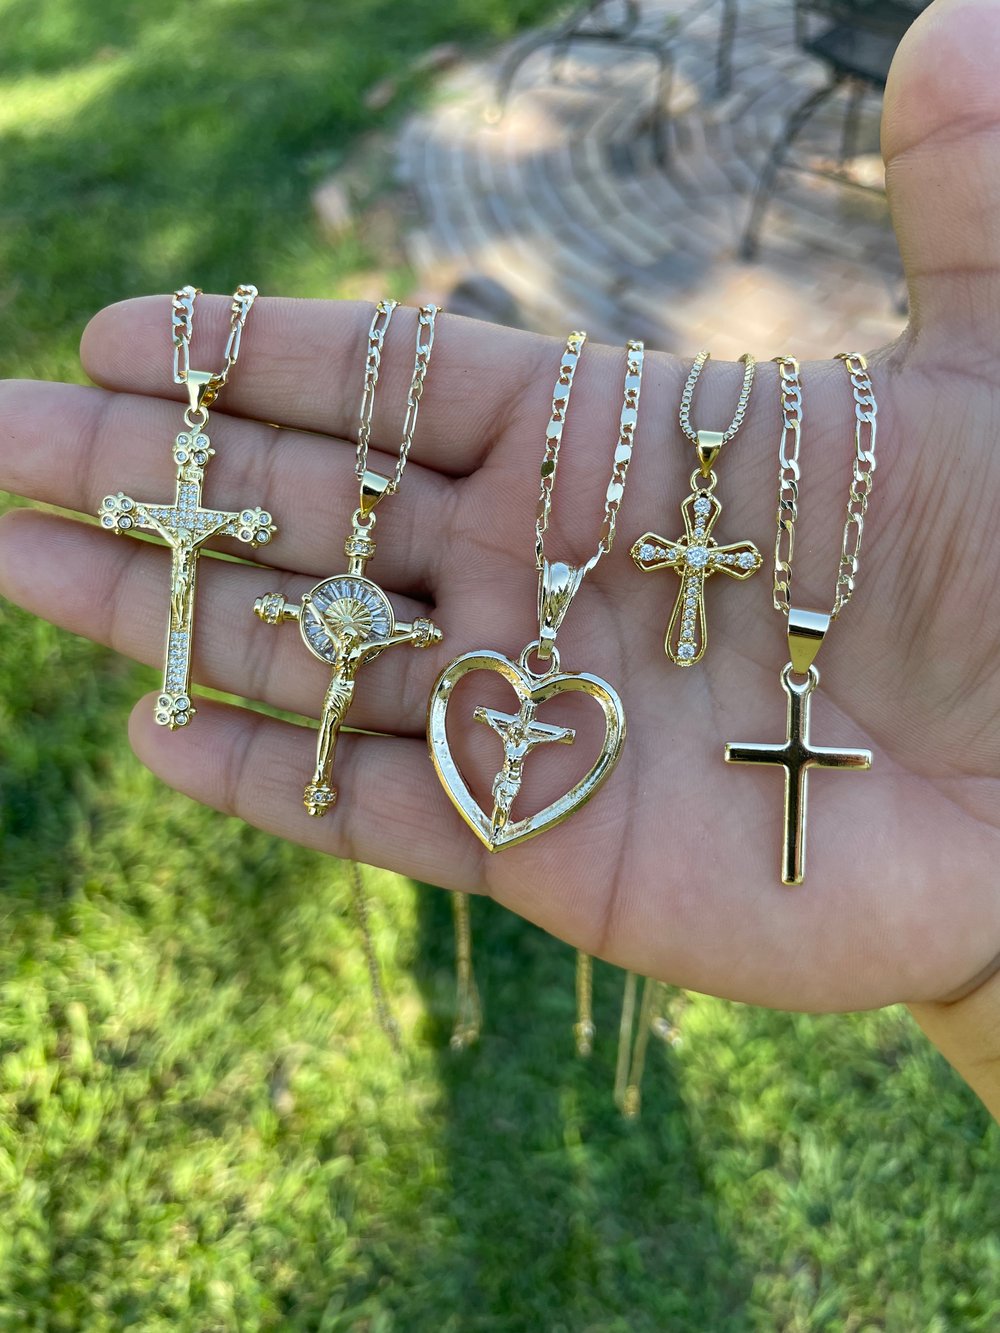 Cross necklaces